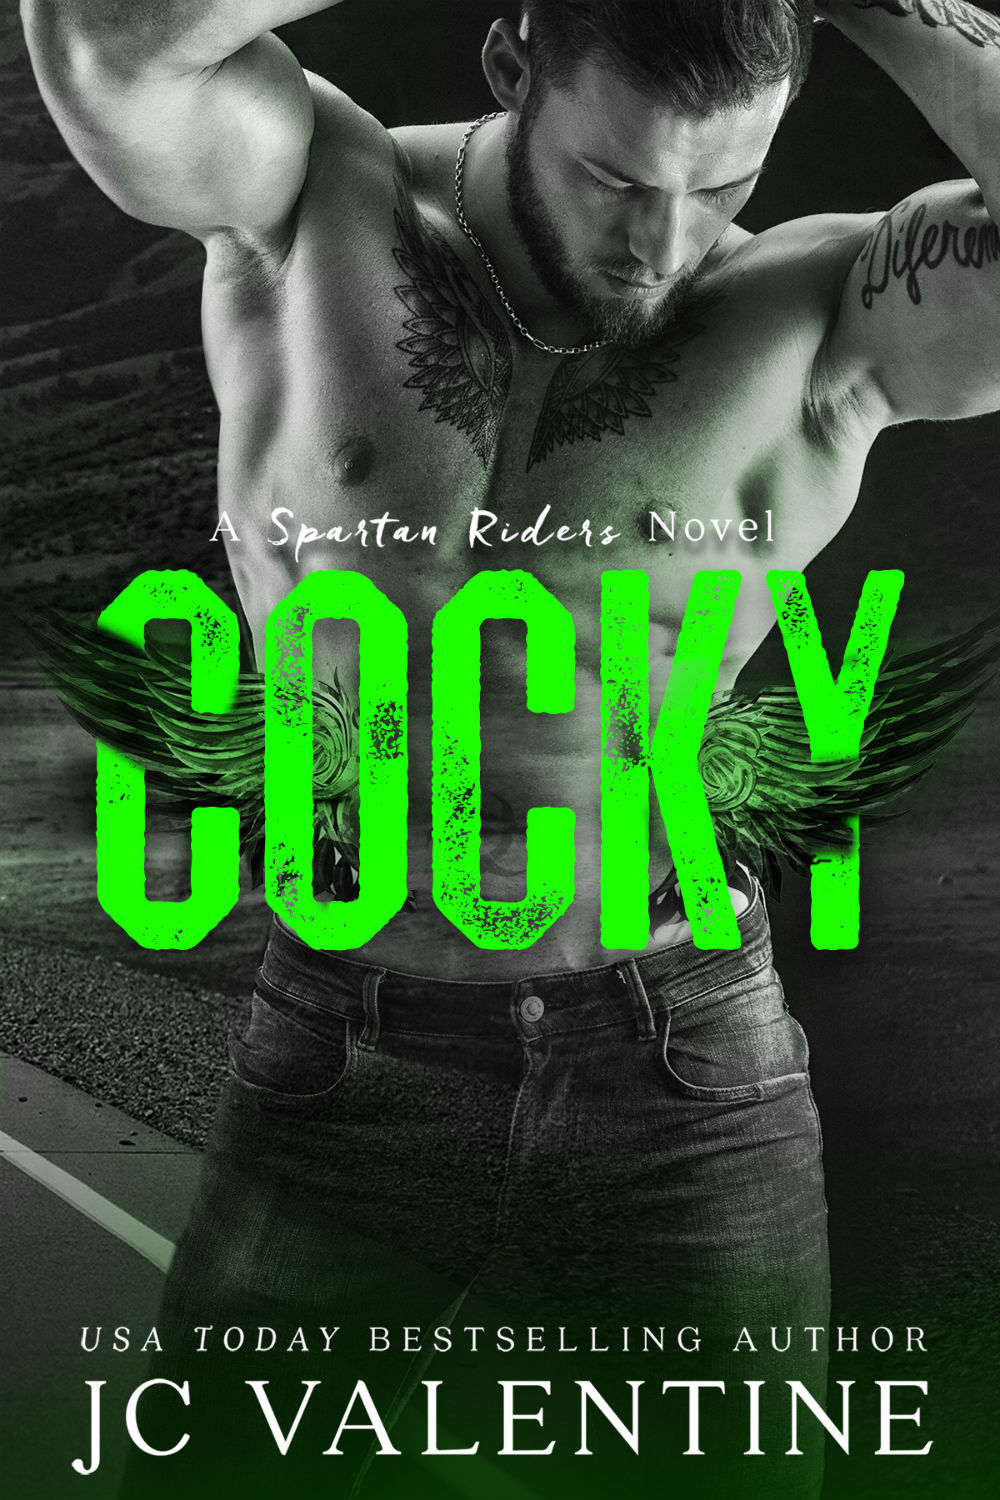 Cocky by J.C. Valentine [Release Blitz]